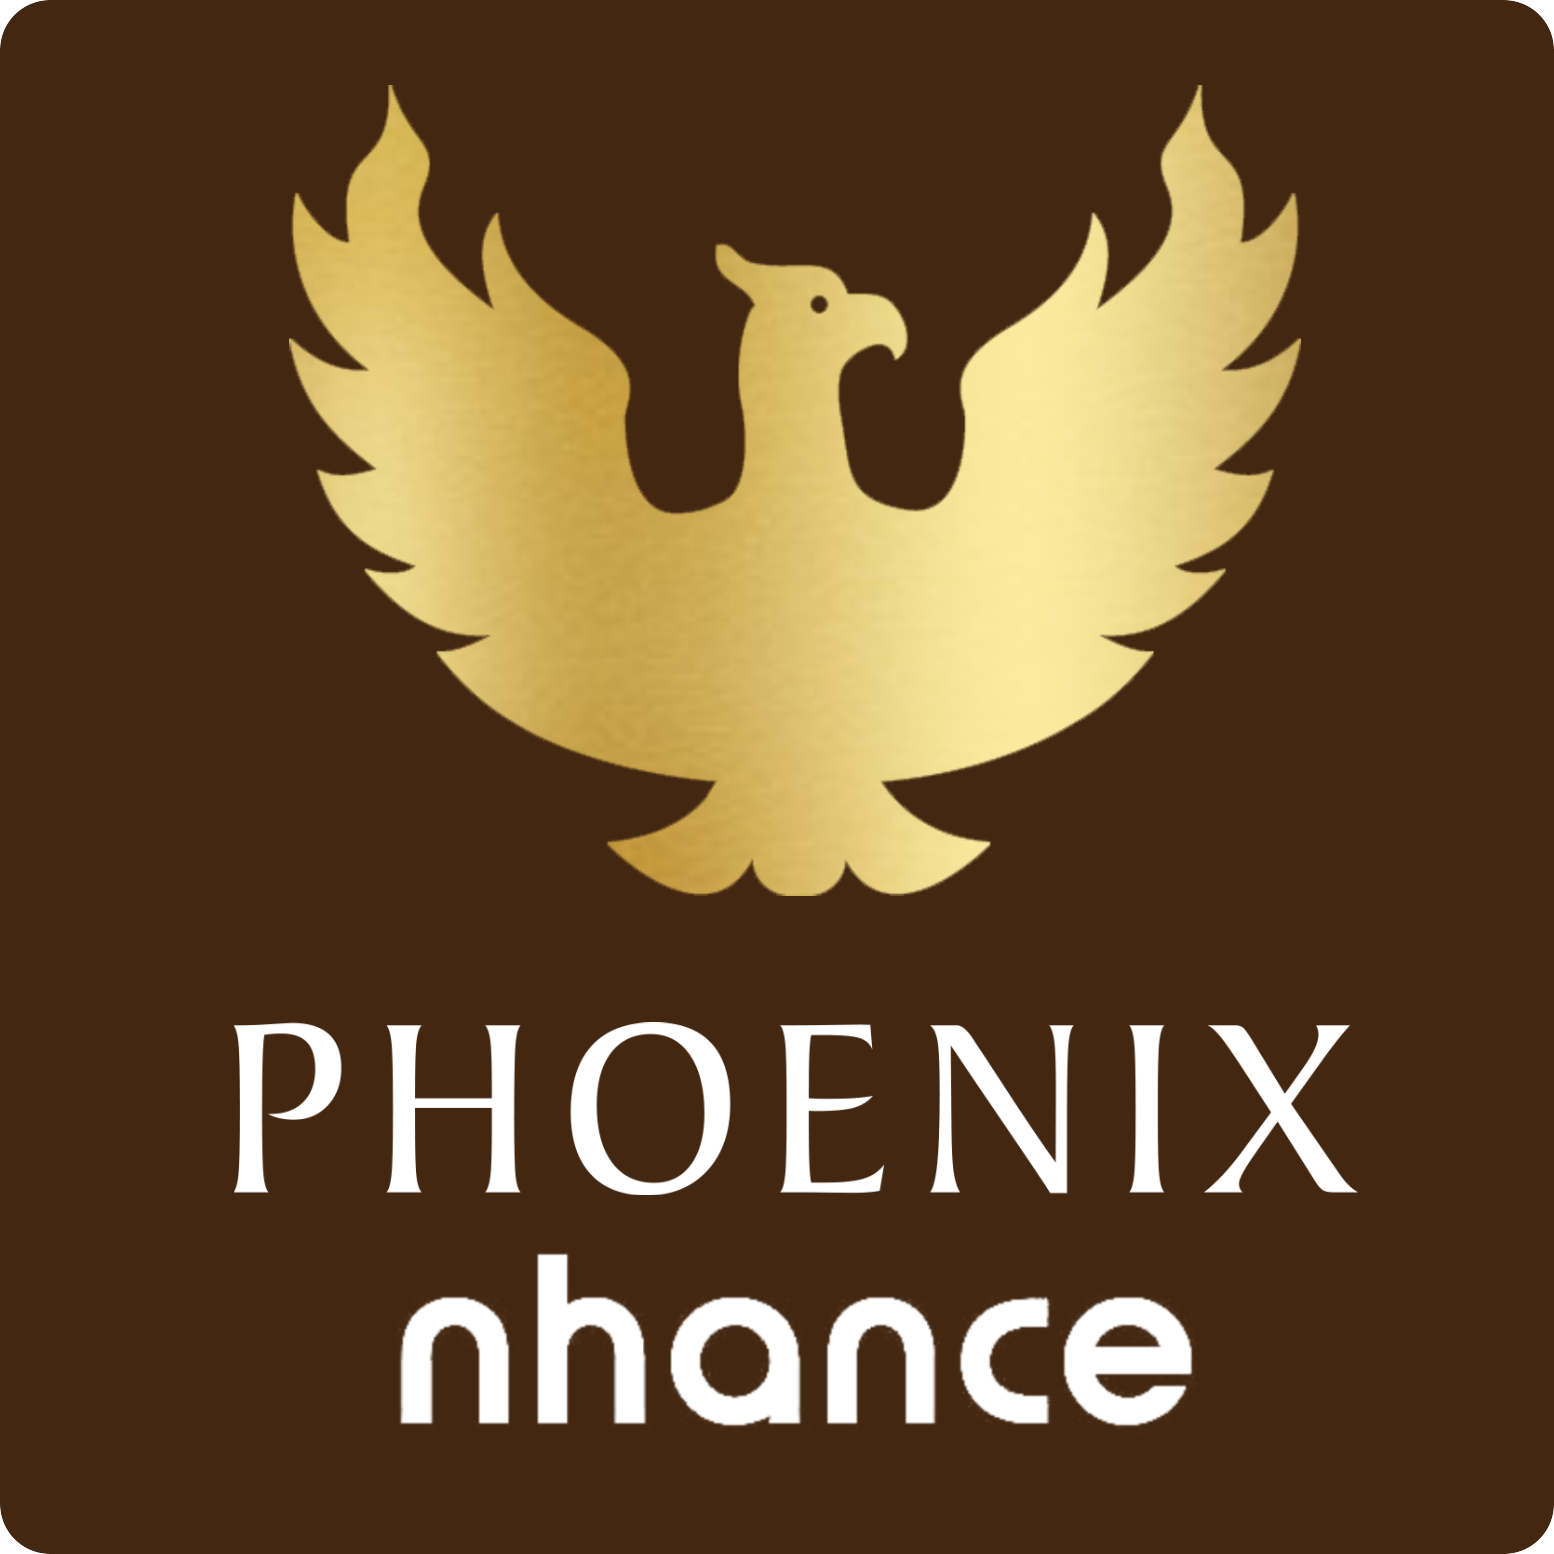 Get the Nhance App